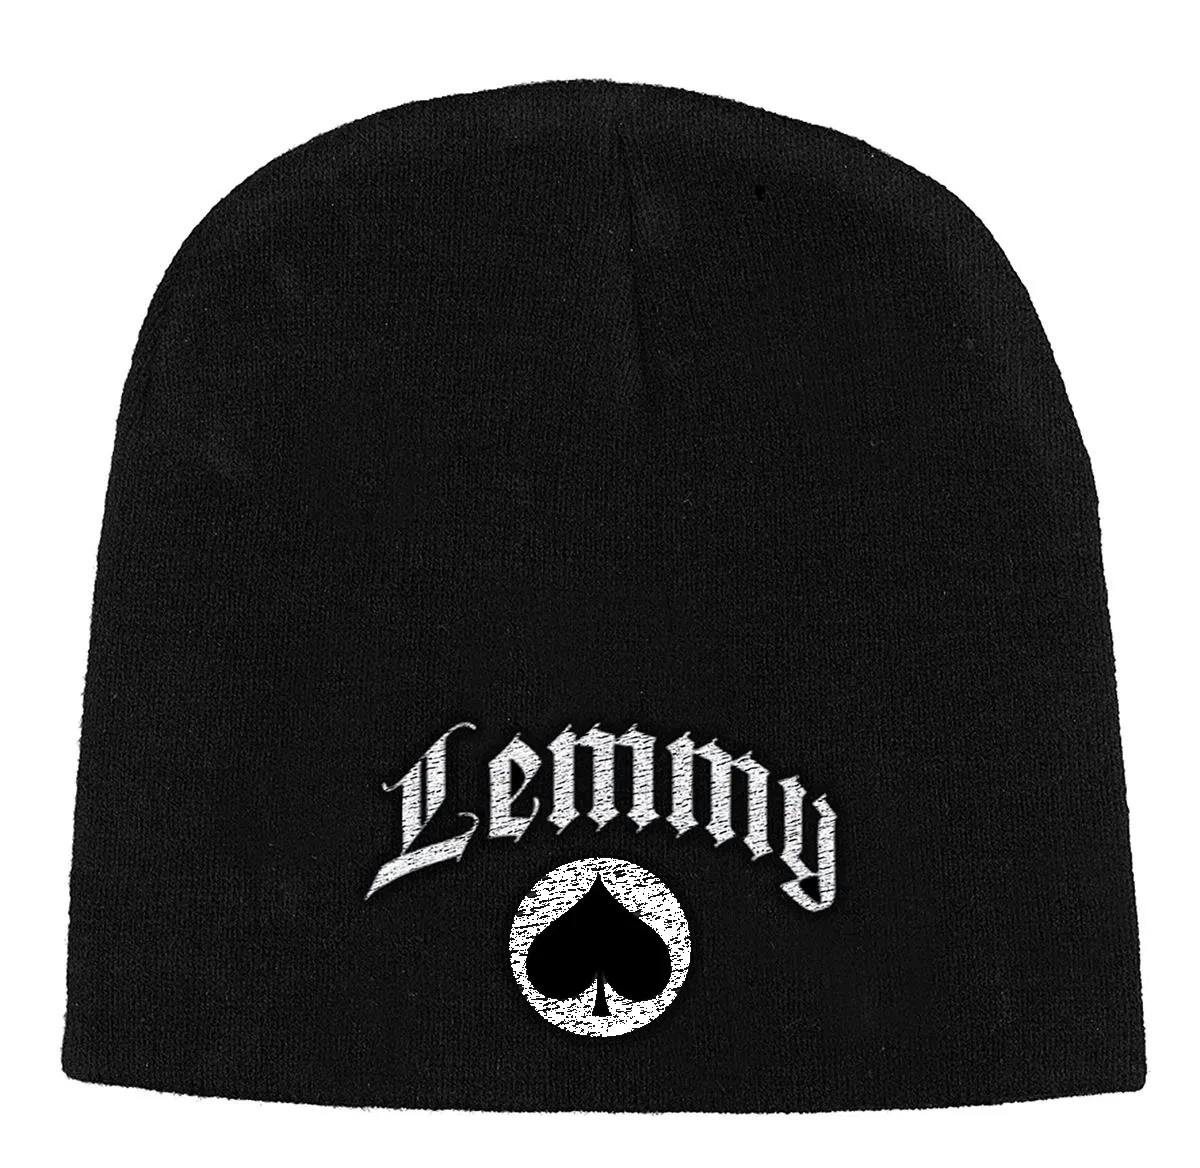 Lemmy beanie